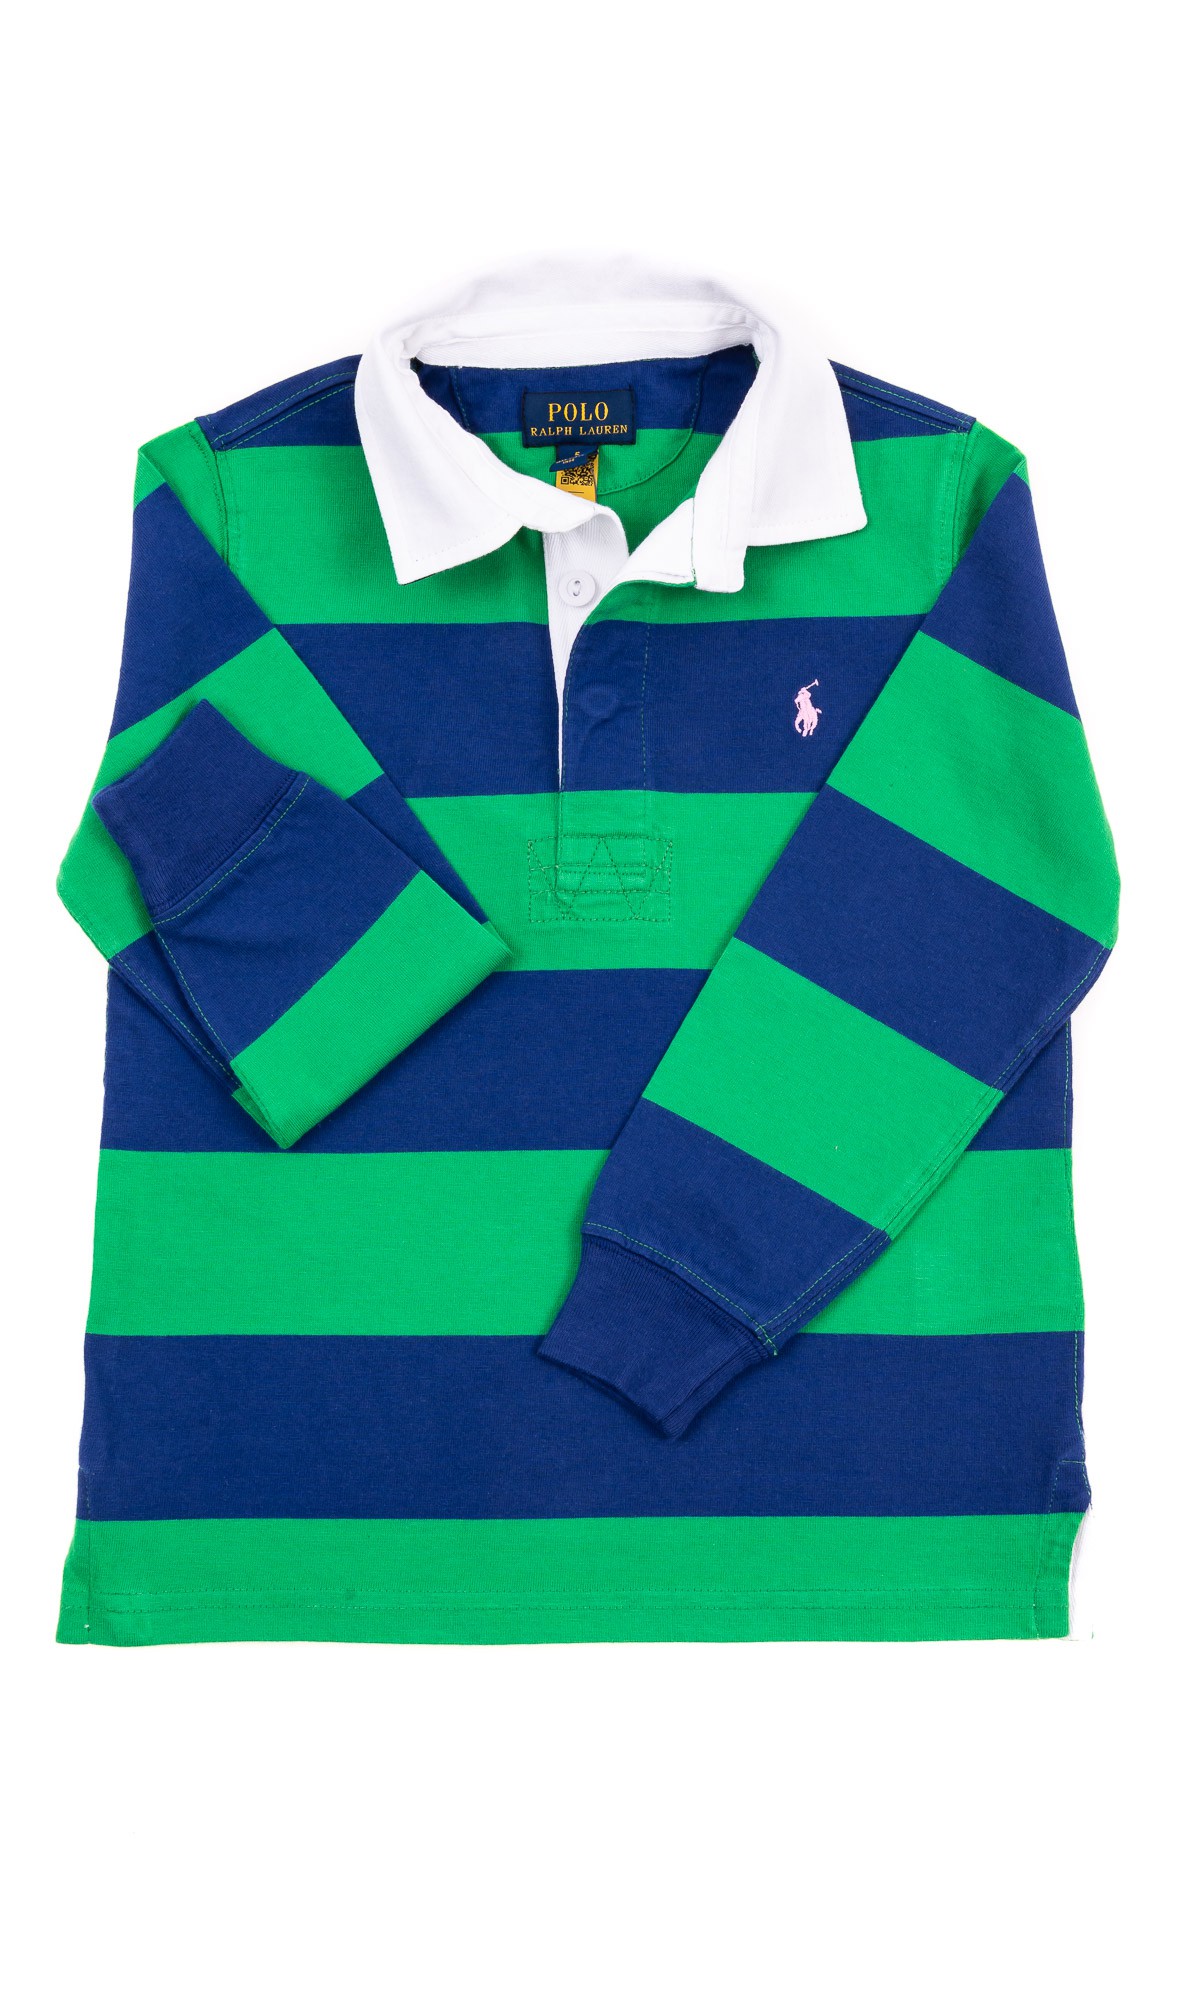 Long-sleeved Polo T-shirt for boys Polo Ralph Lauren - Celebrity-Club